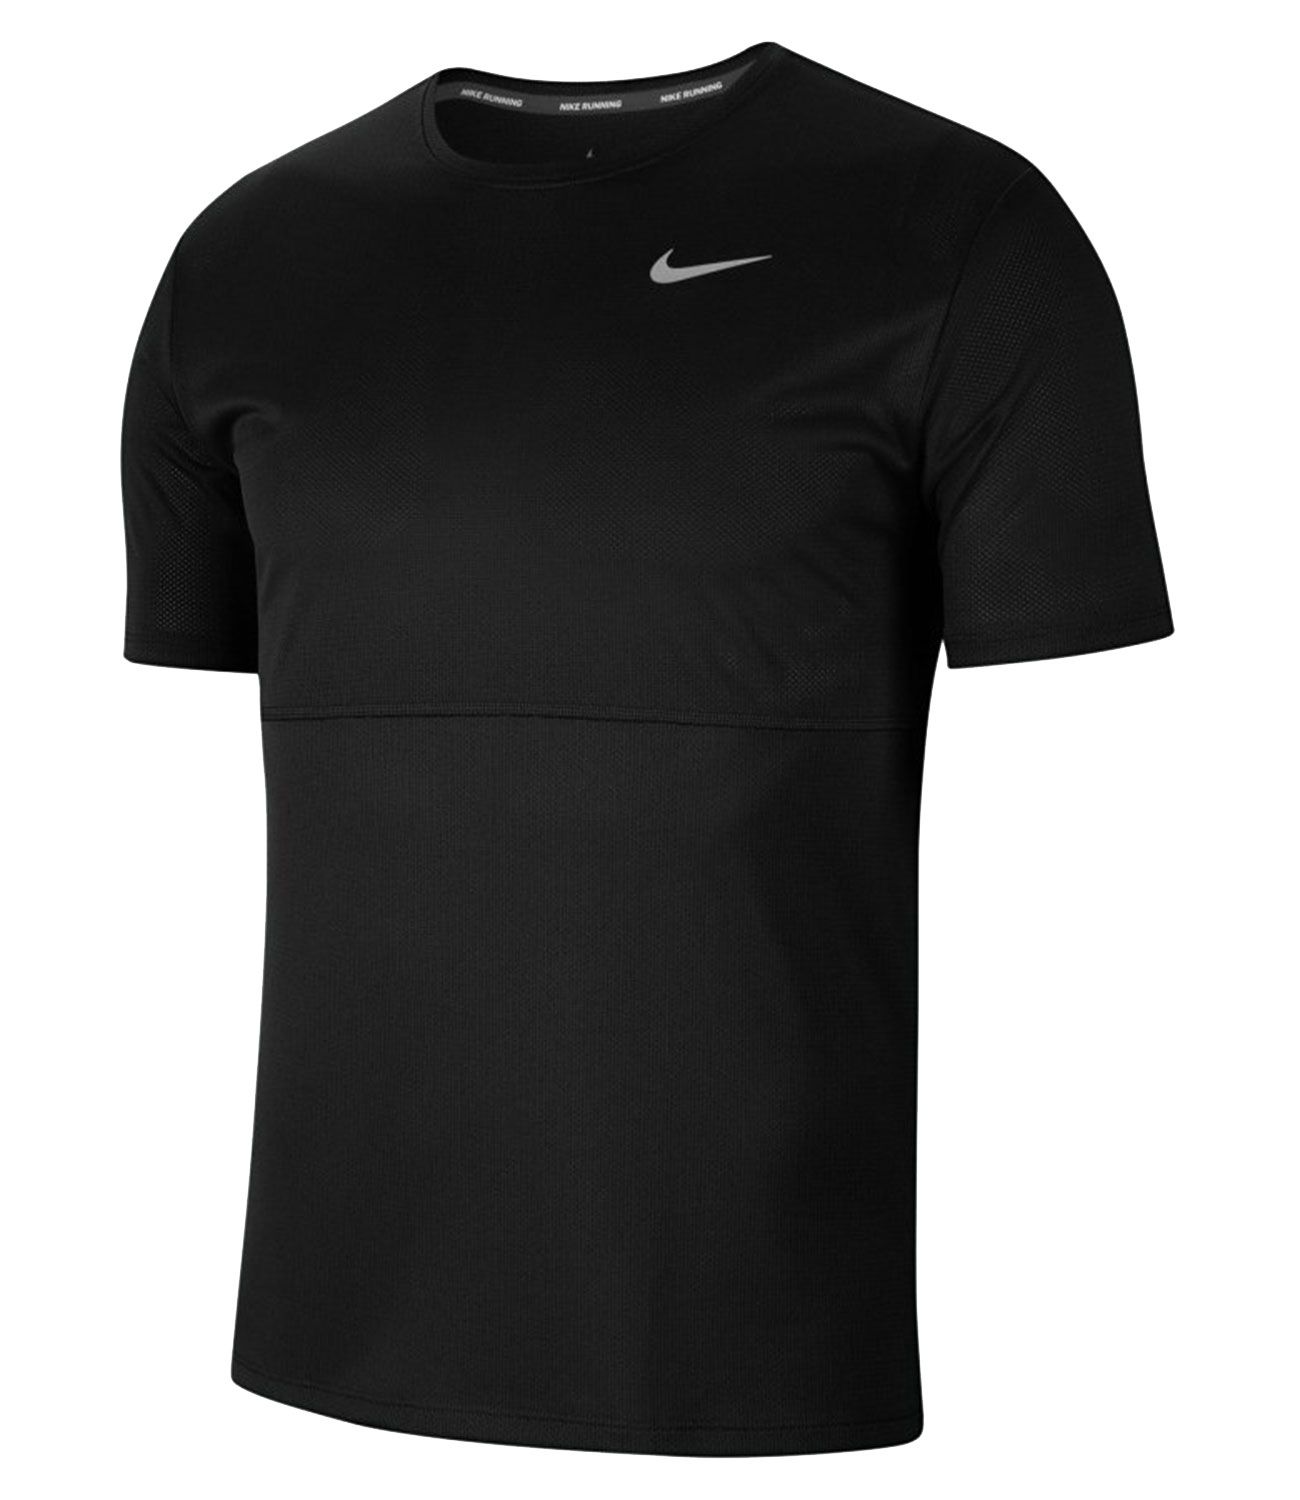 Футболки найк мужские купить. Nike Dri Fit Breathe. Футболка Nike Top SS Run. Cj5332-100 футболка найк. Nike Running футболка мужская Dri Fit.